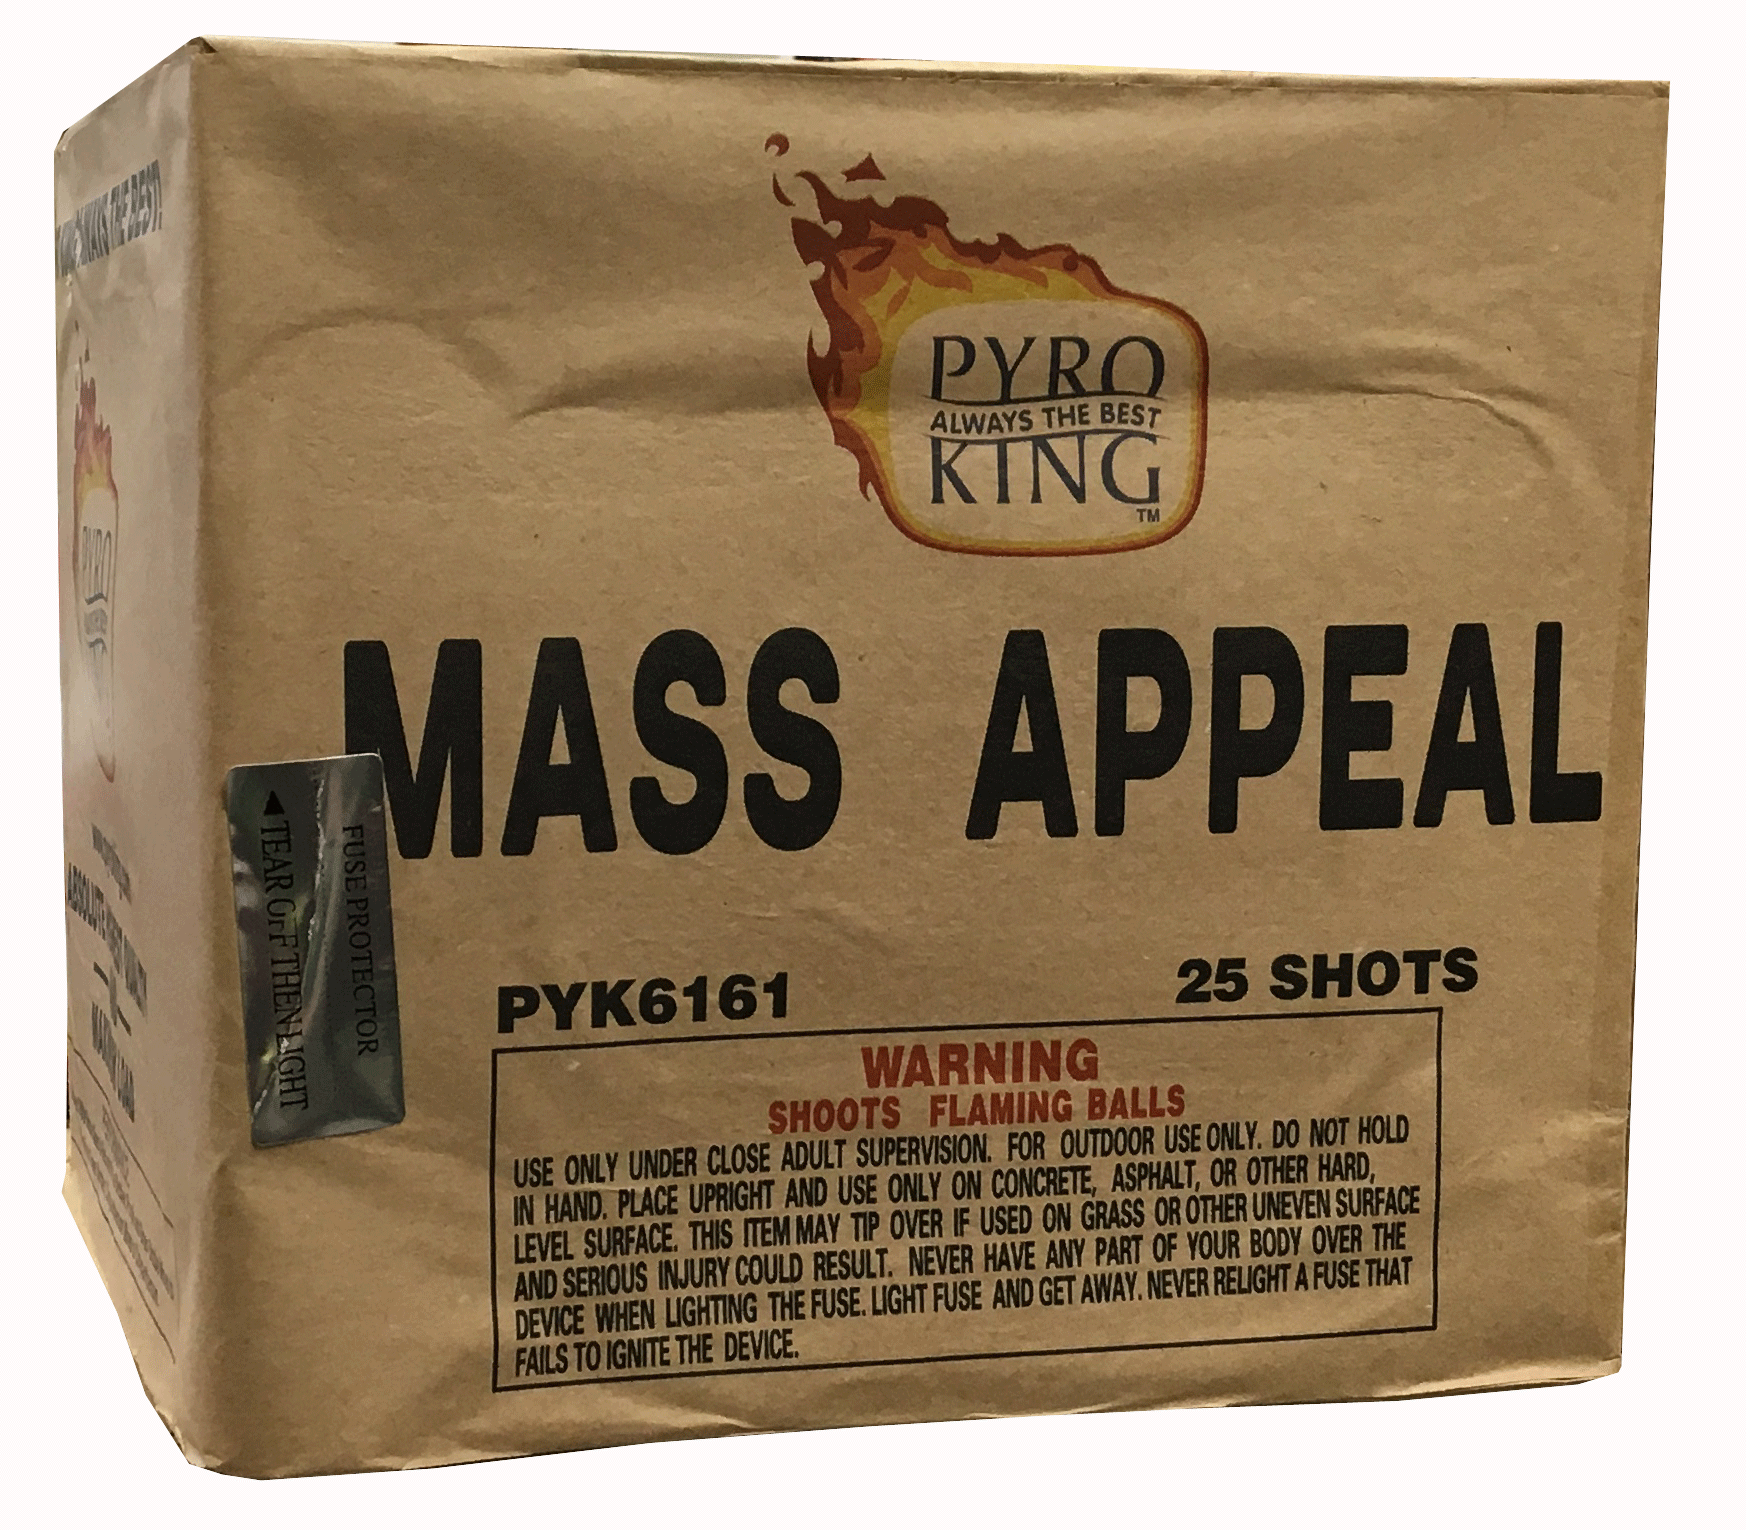 Mass Appeal